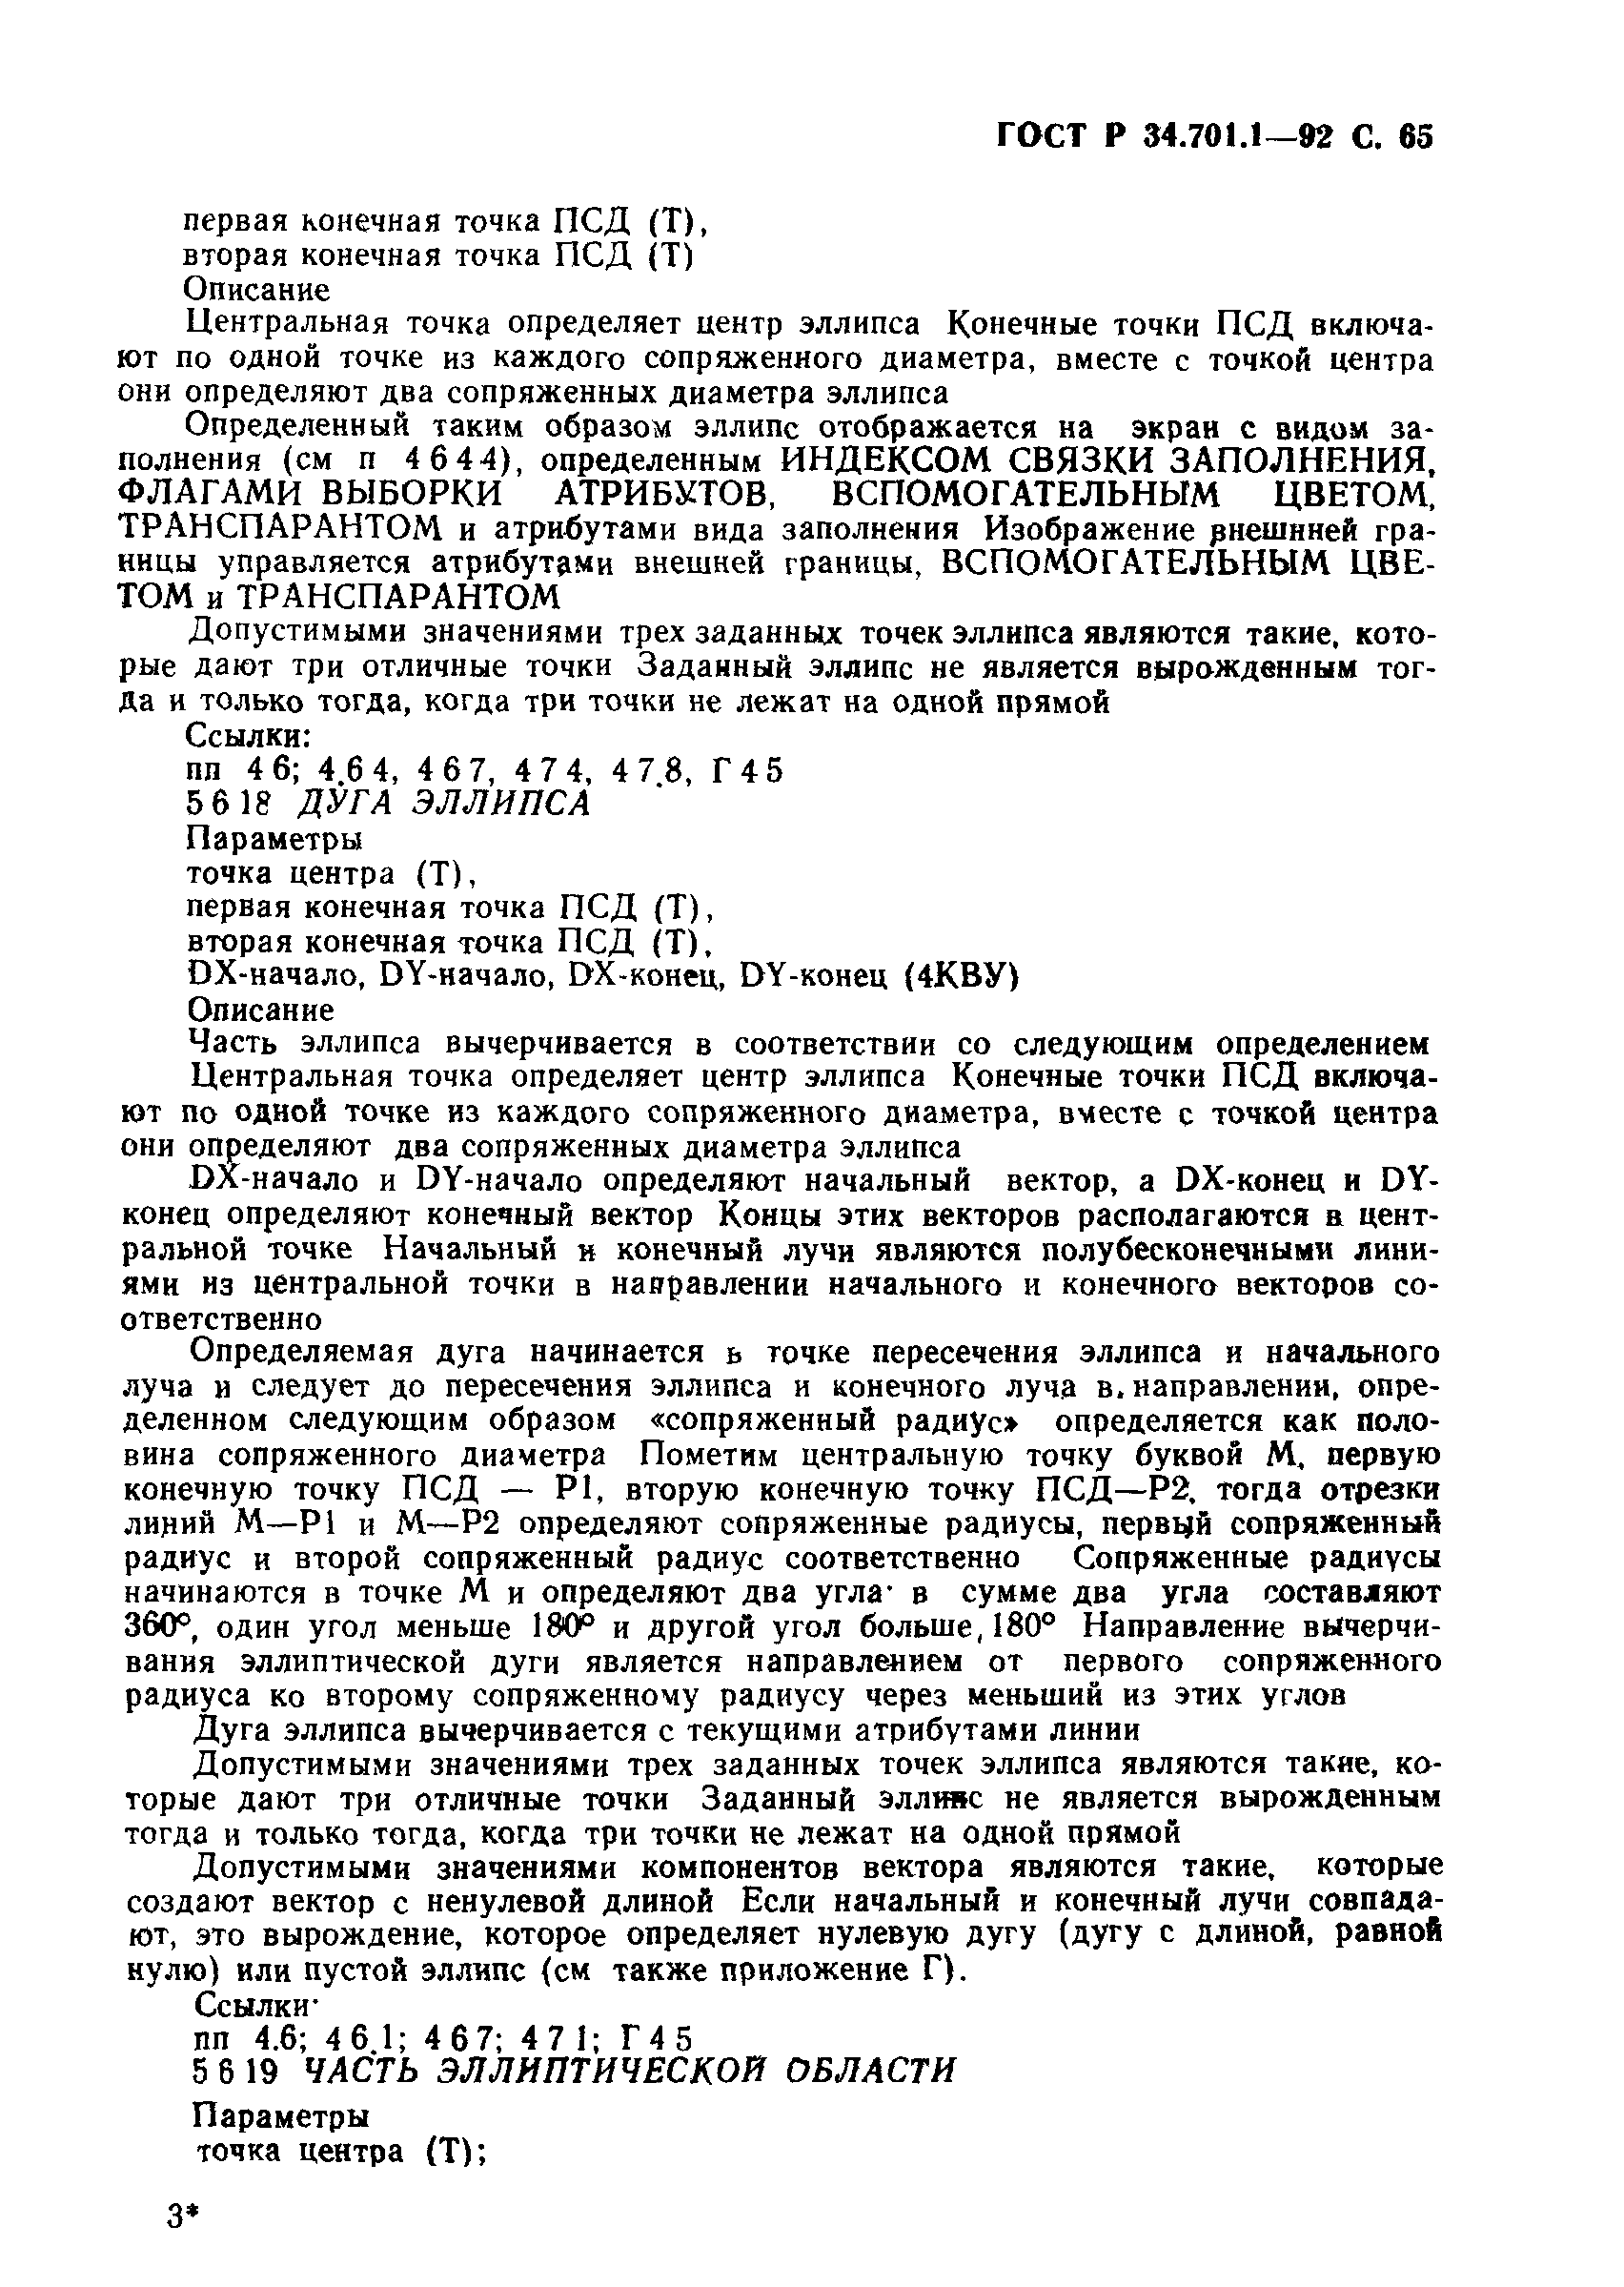 ГОСТ Р 34.701.1-92